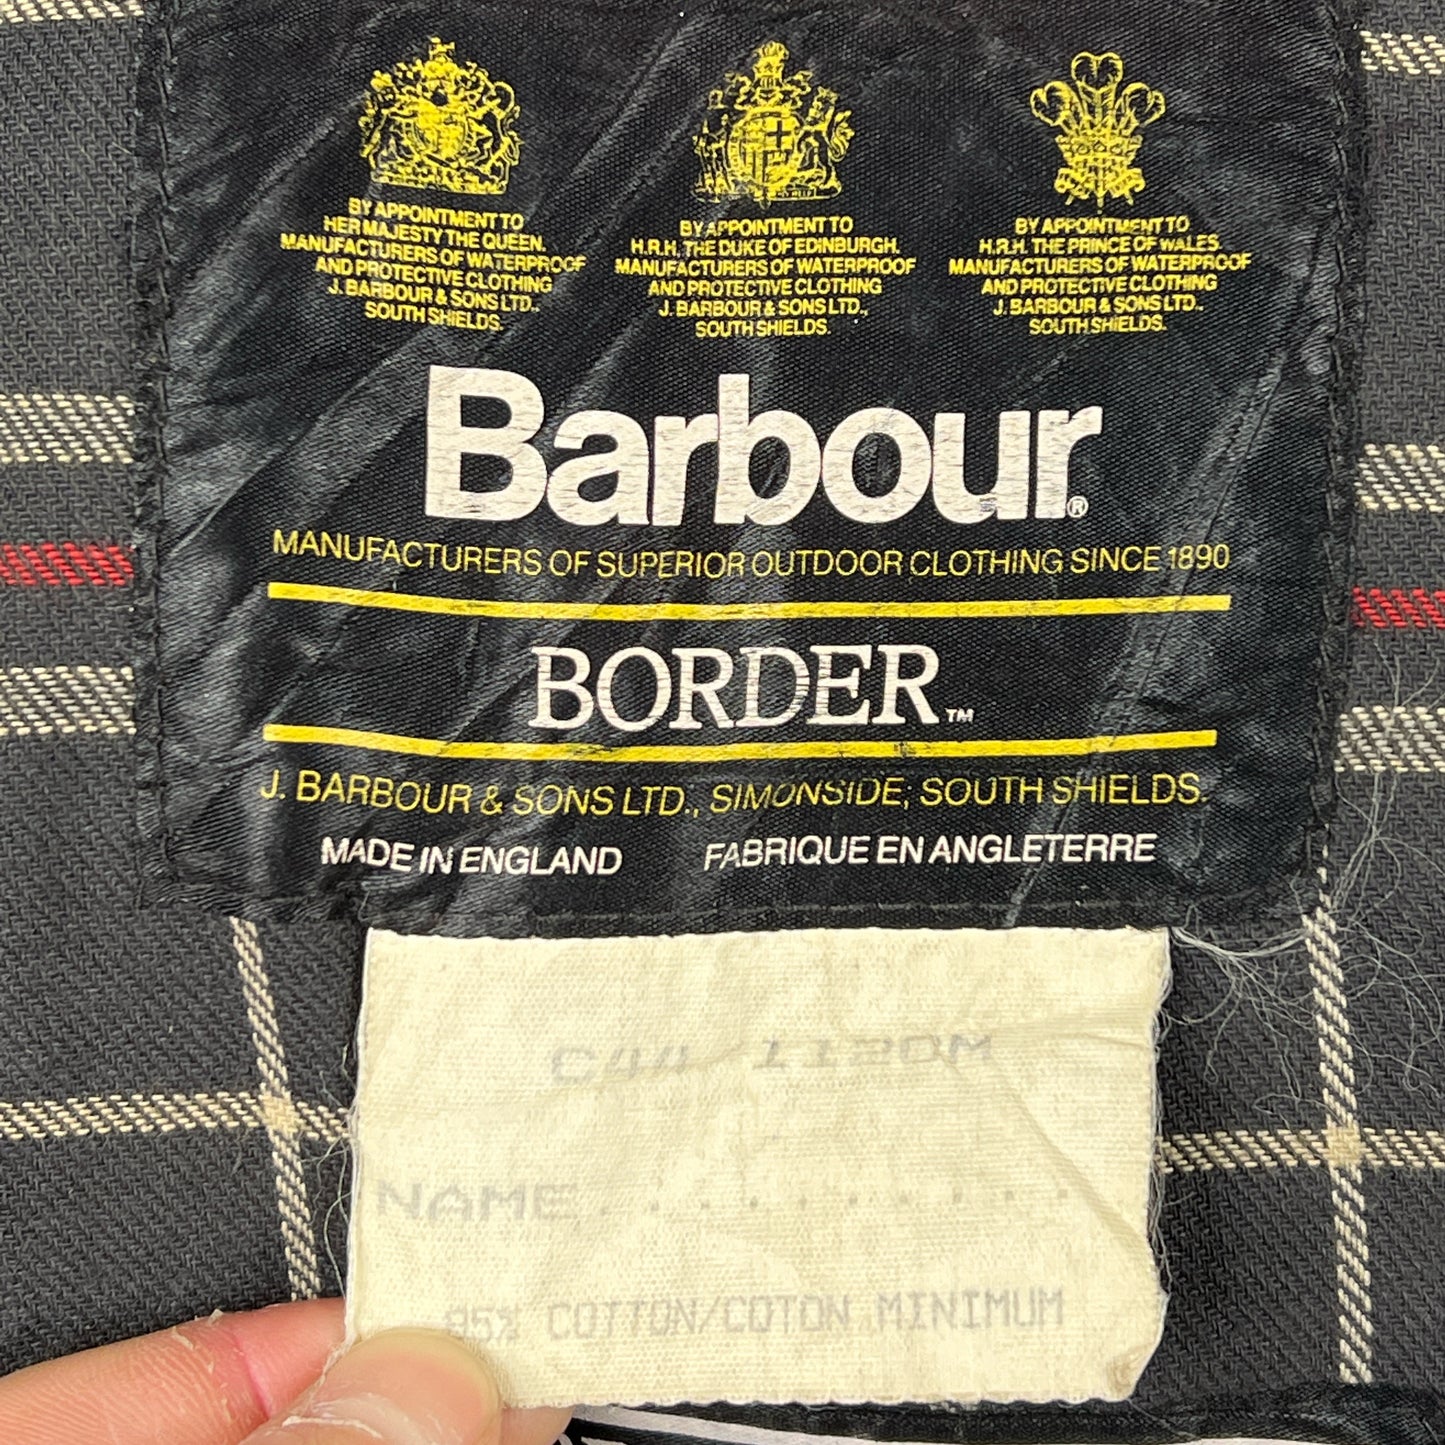 Barbour Uomo Border Blu cotone Cerato C44/112cm Navy Border Coat Large/XL